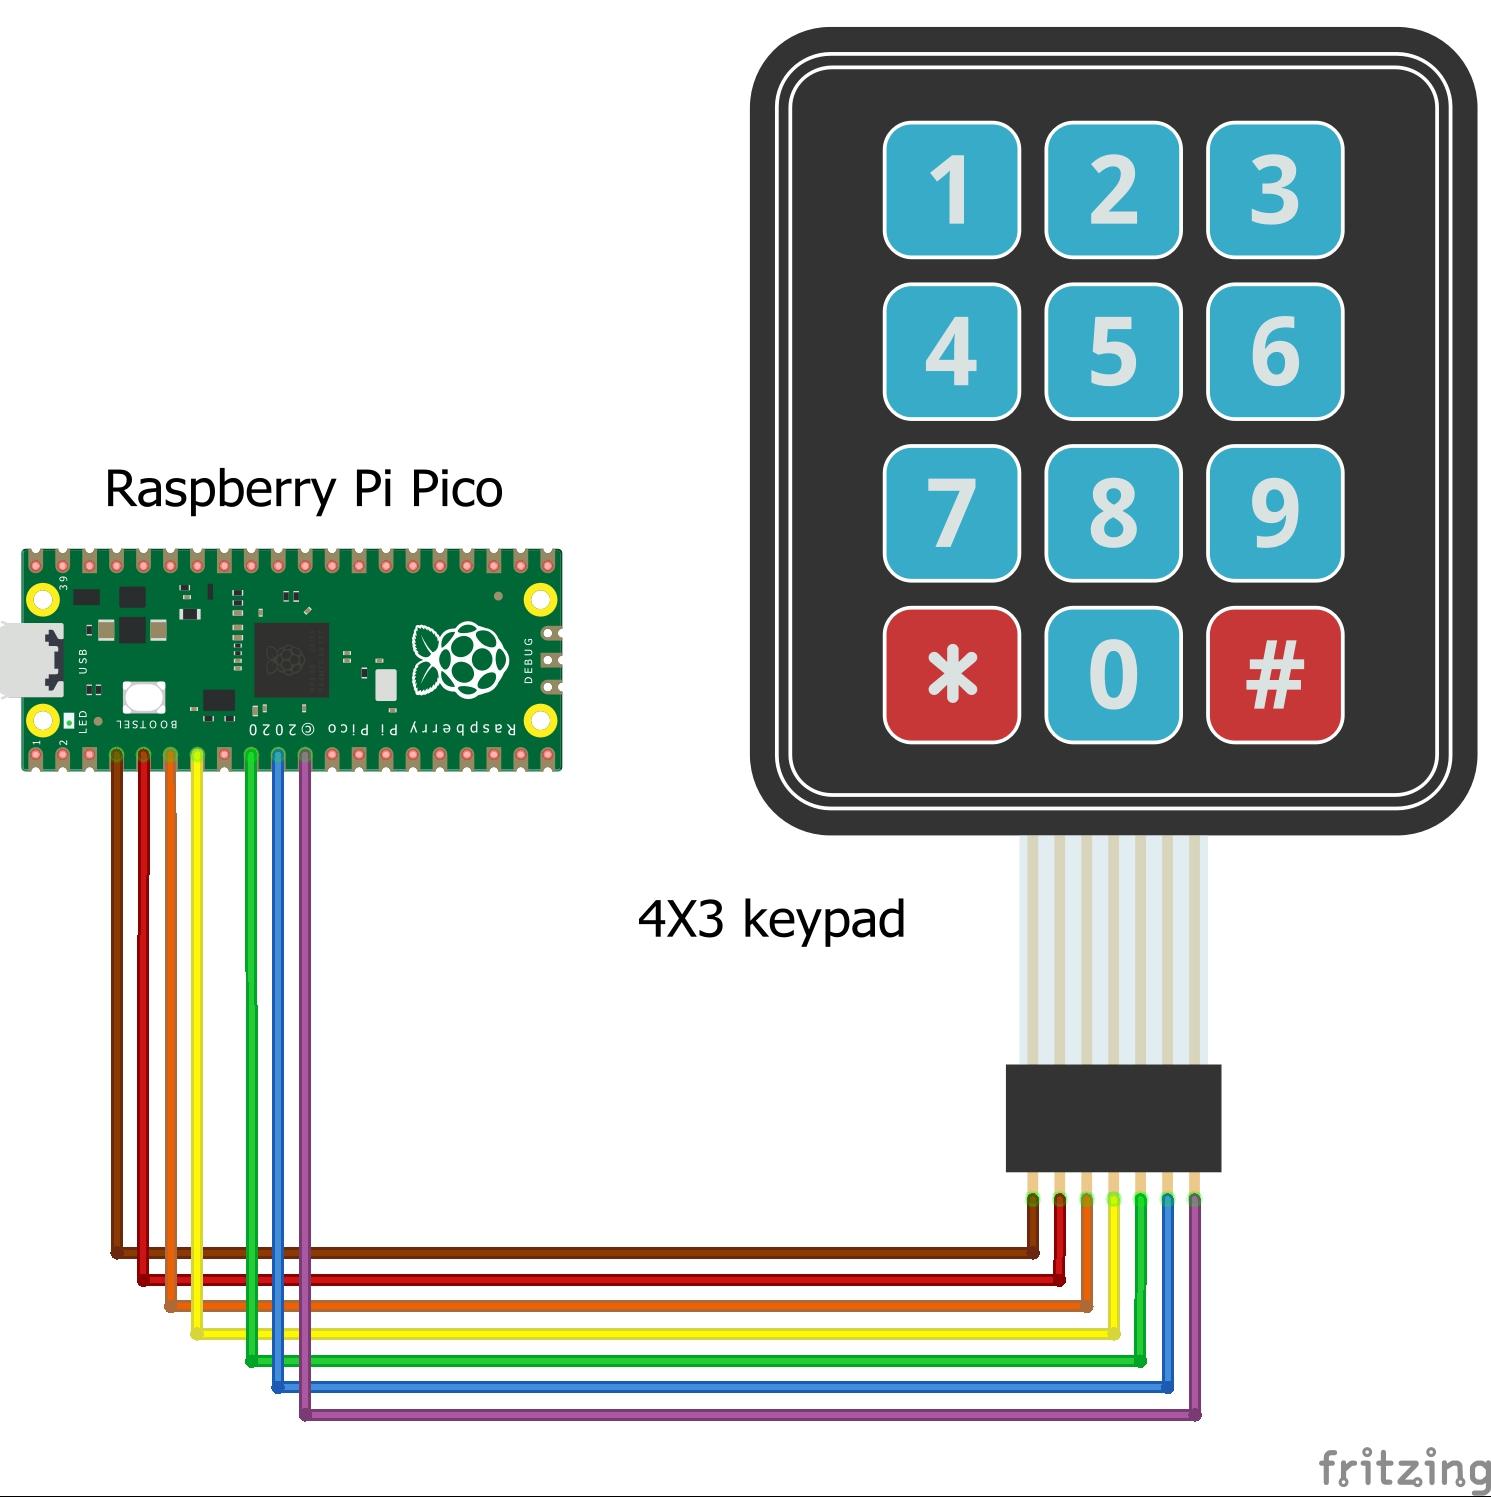 Raspberry pi pico and 4X3 Keypad.jpg